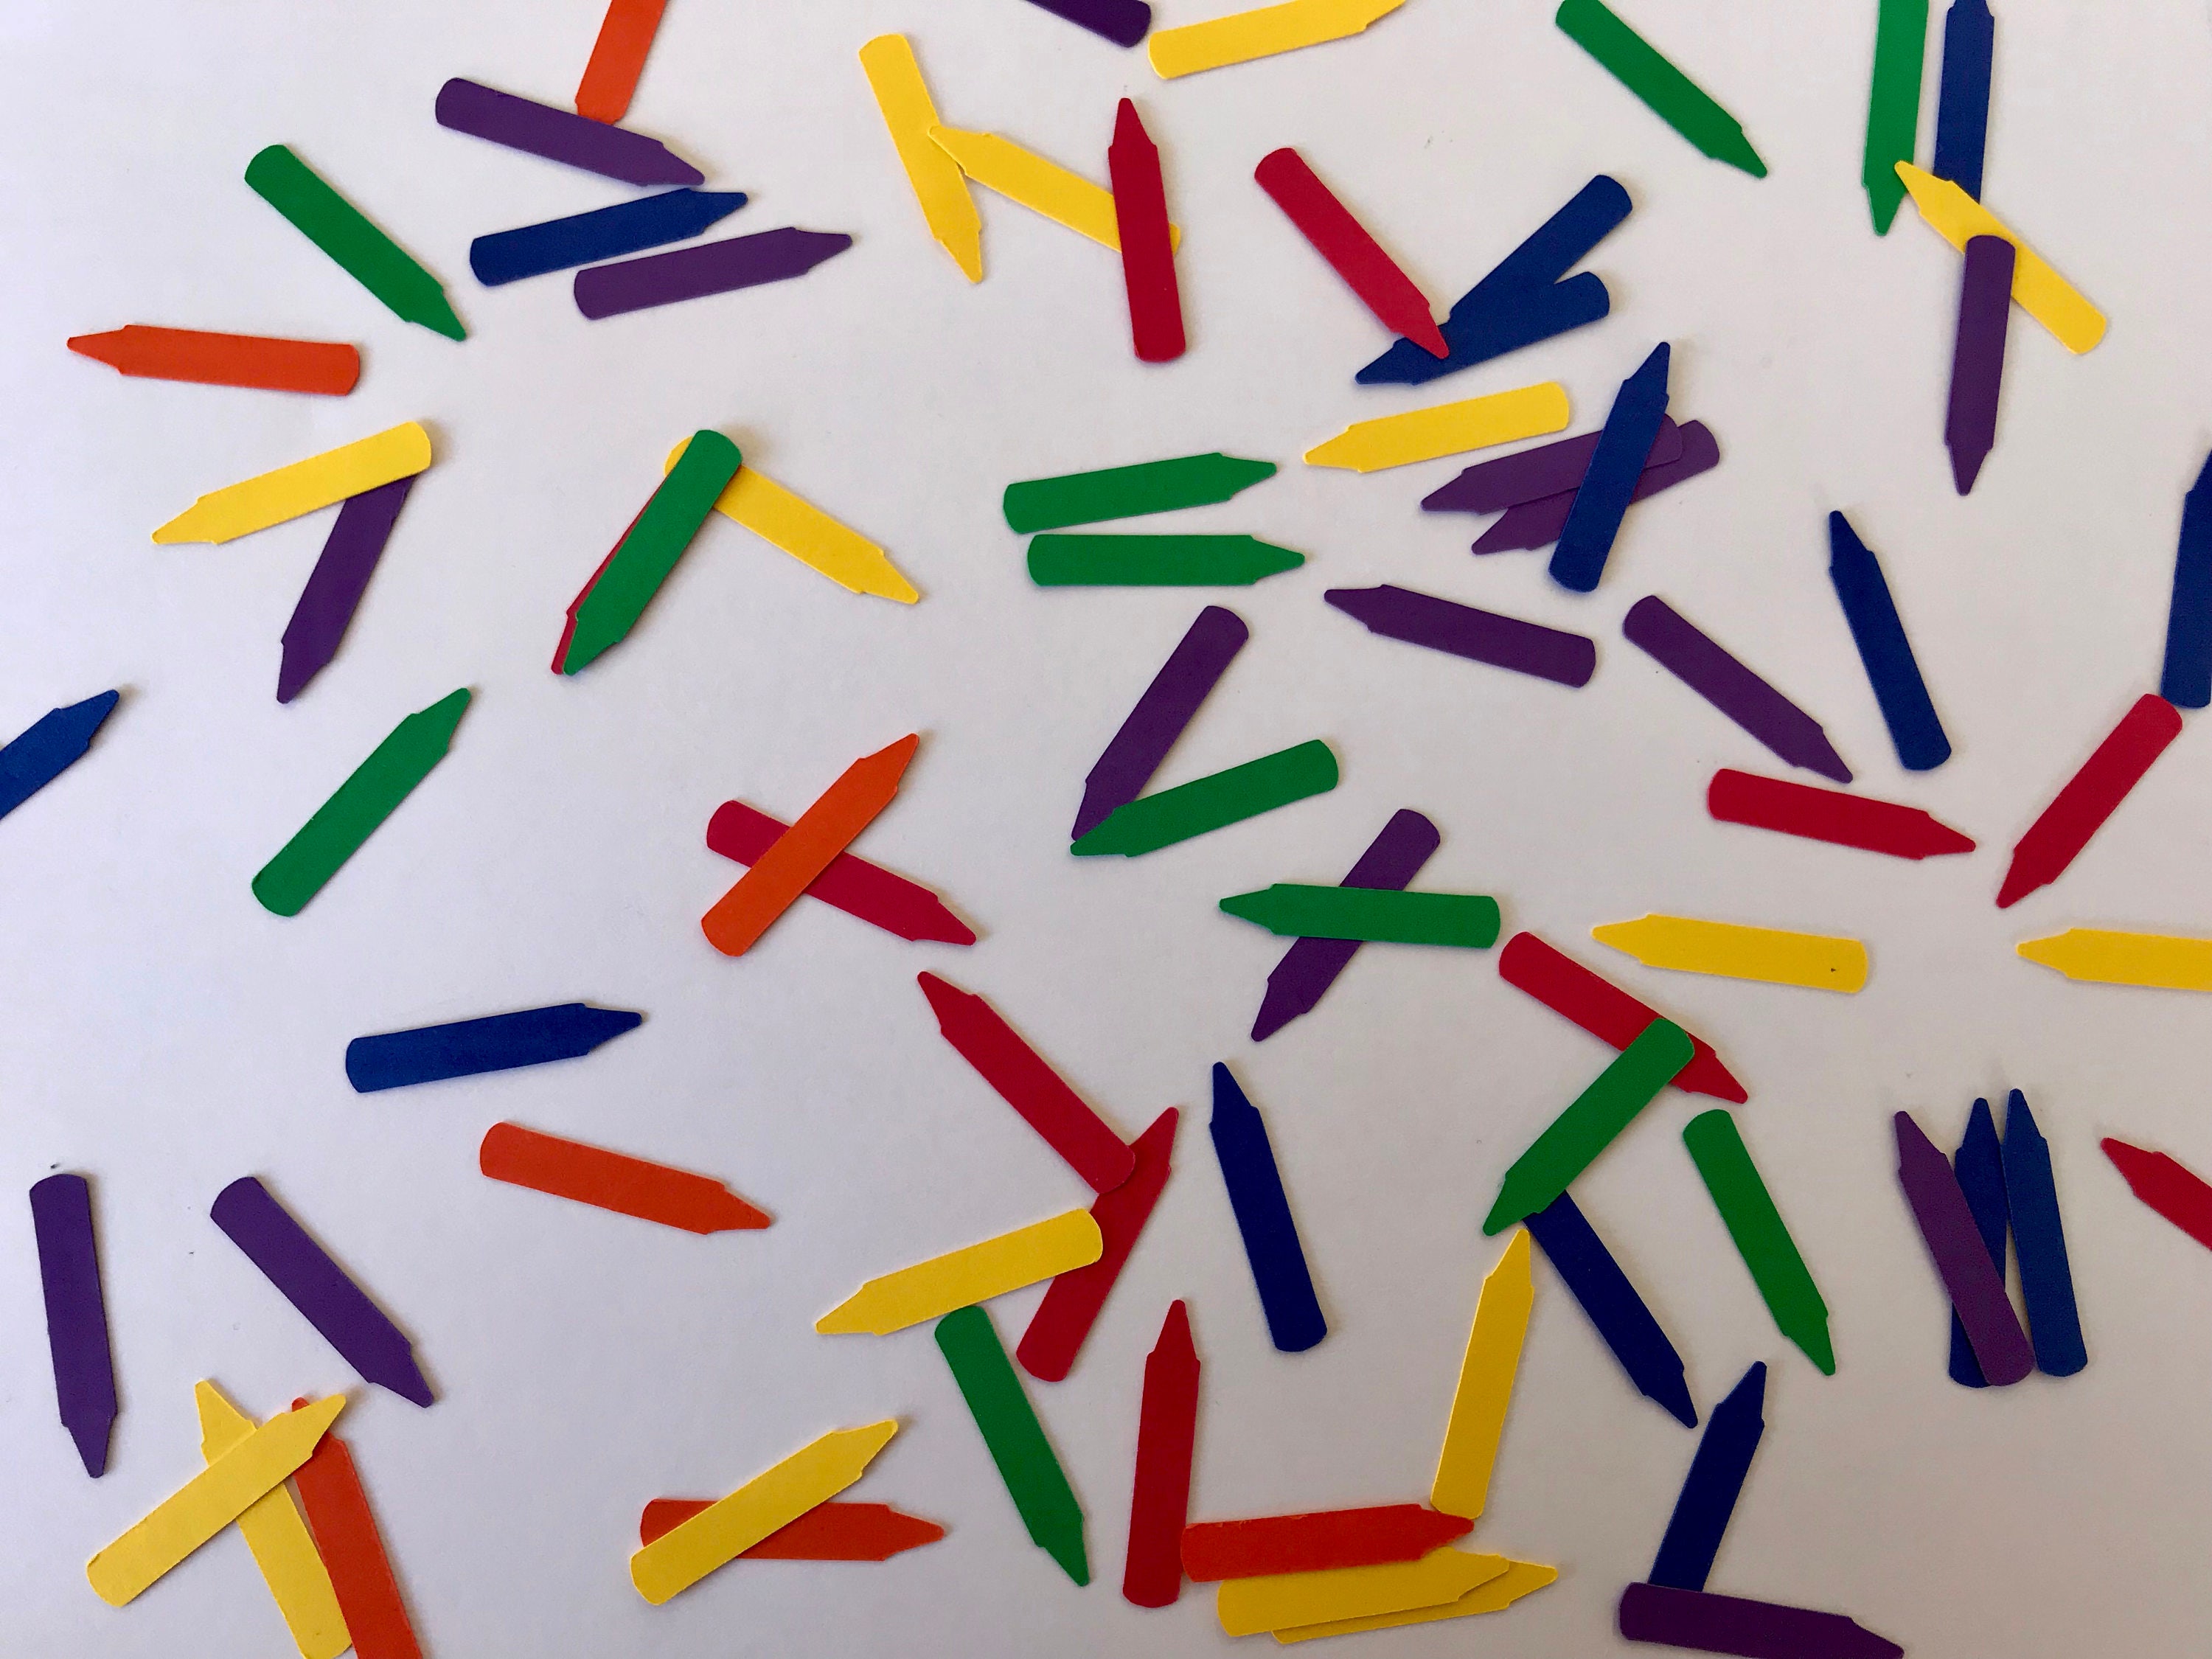 Specialty Crayons: kids Made Modern Double-pointed Crazy Crayons, and  Crayola Metallicfx Crayons NIB 